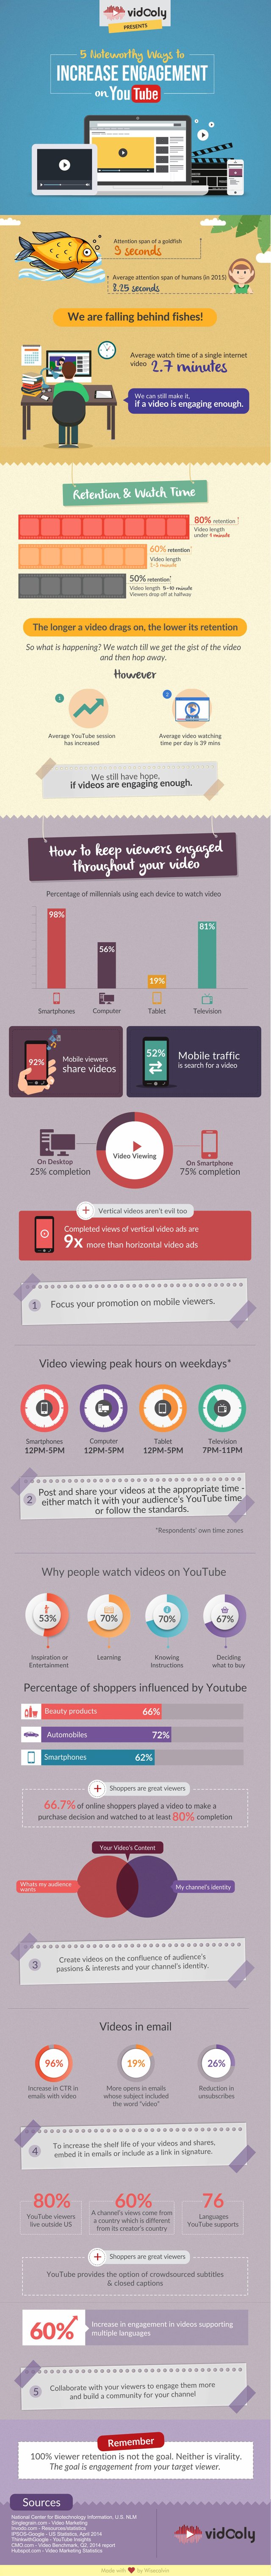 YouTube-engagement-infographic.jpg